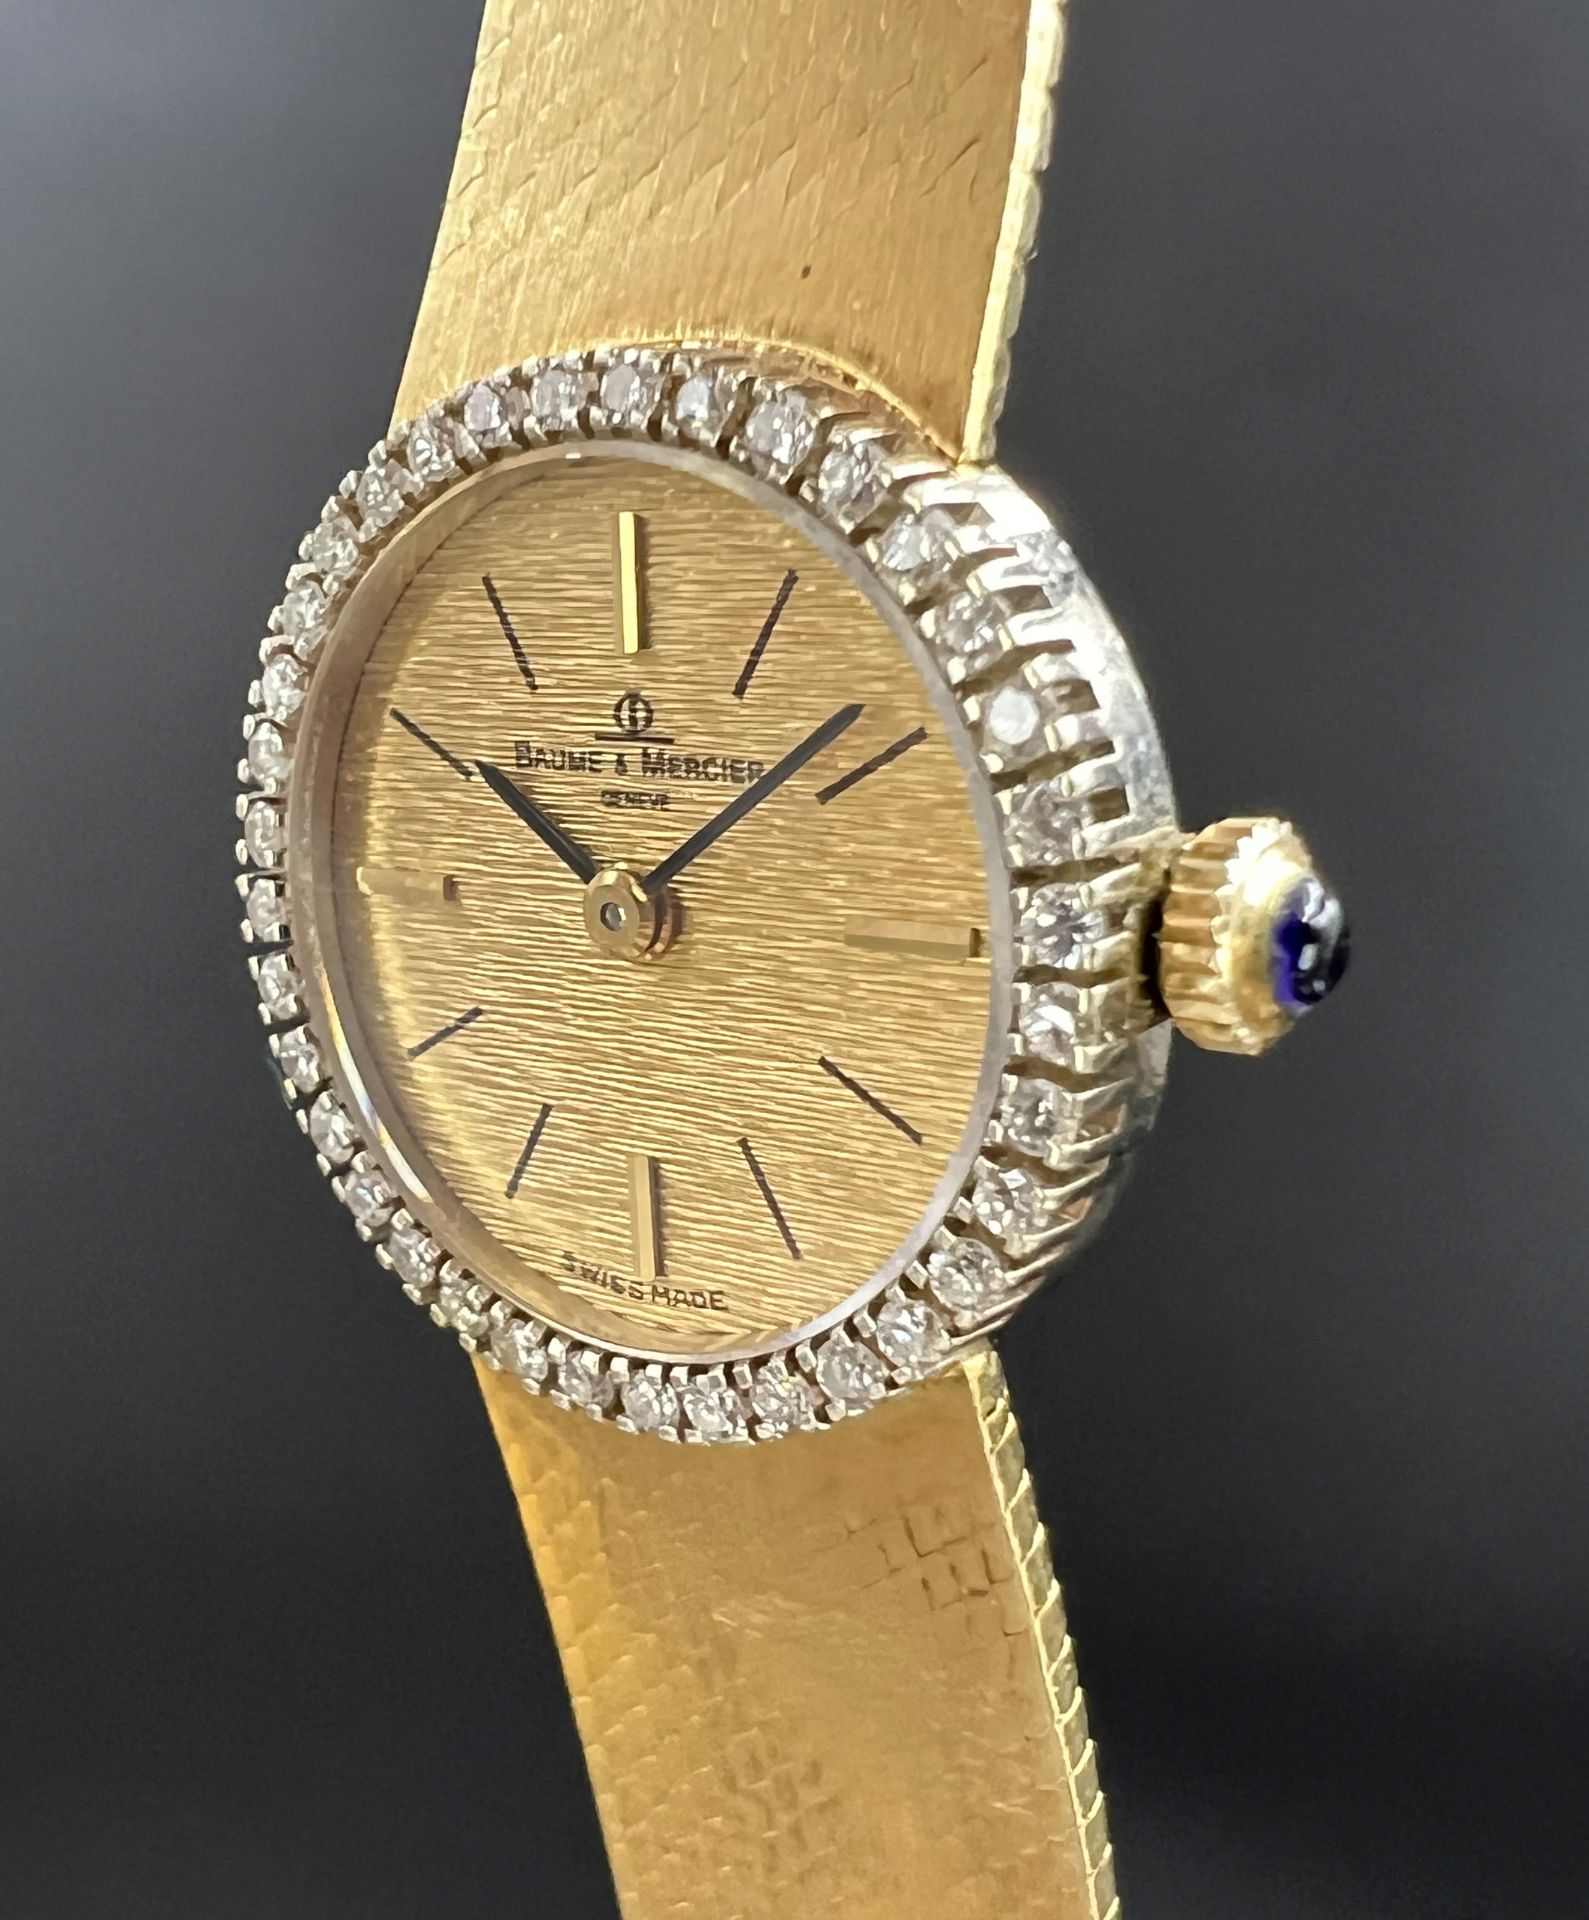 Baumen & Mercier ladies' wristwatch. 750 yellow gold with diamonds. - Image 2 of 8